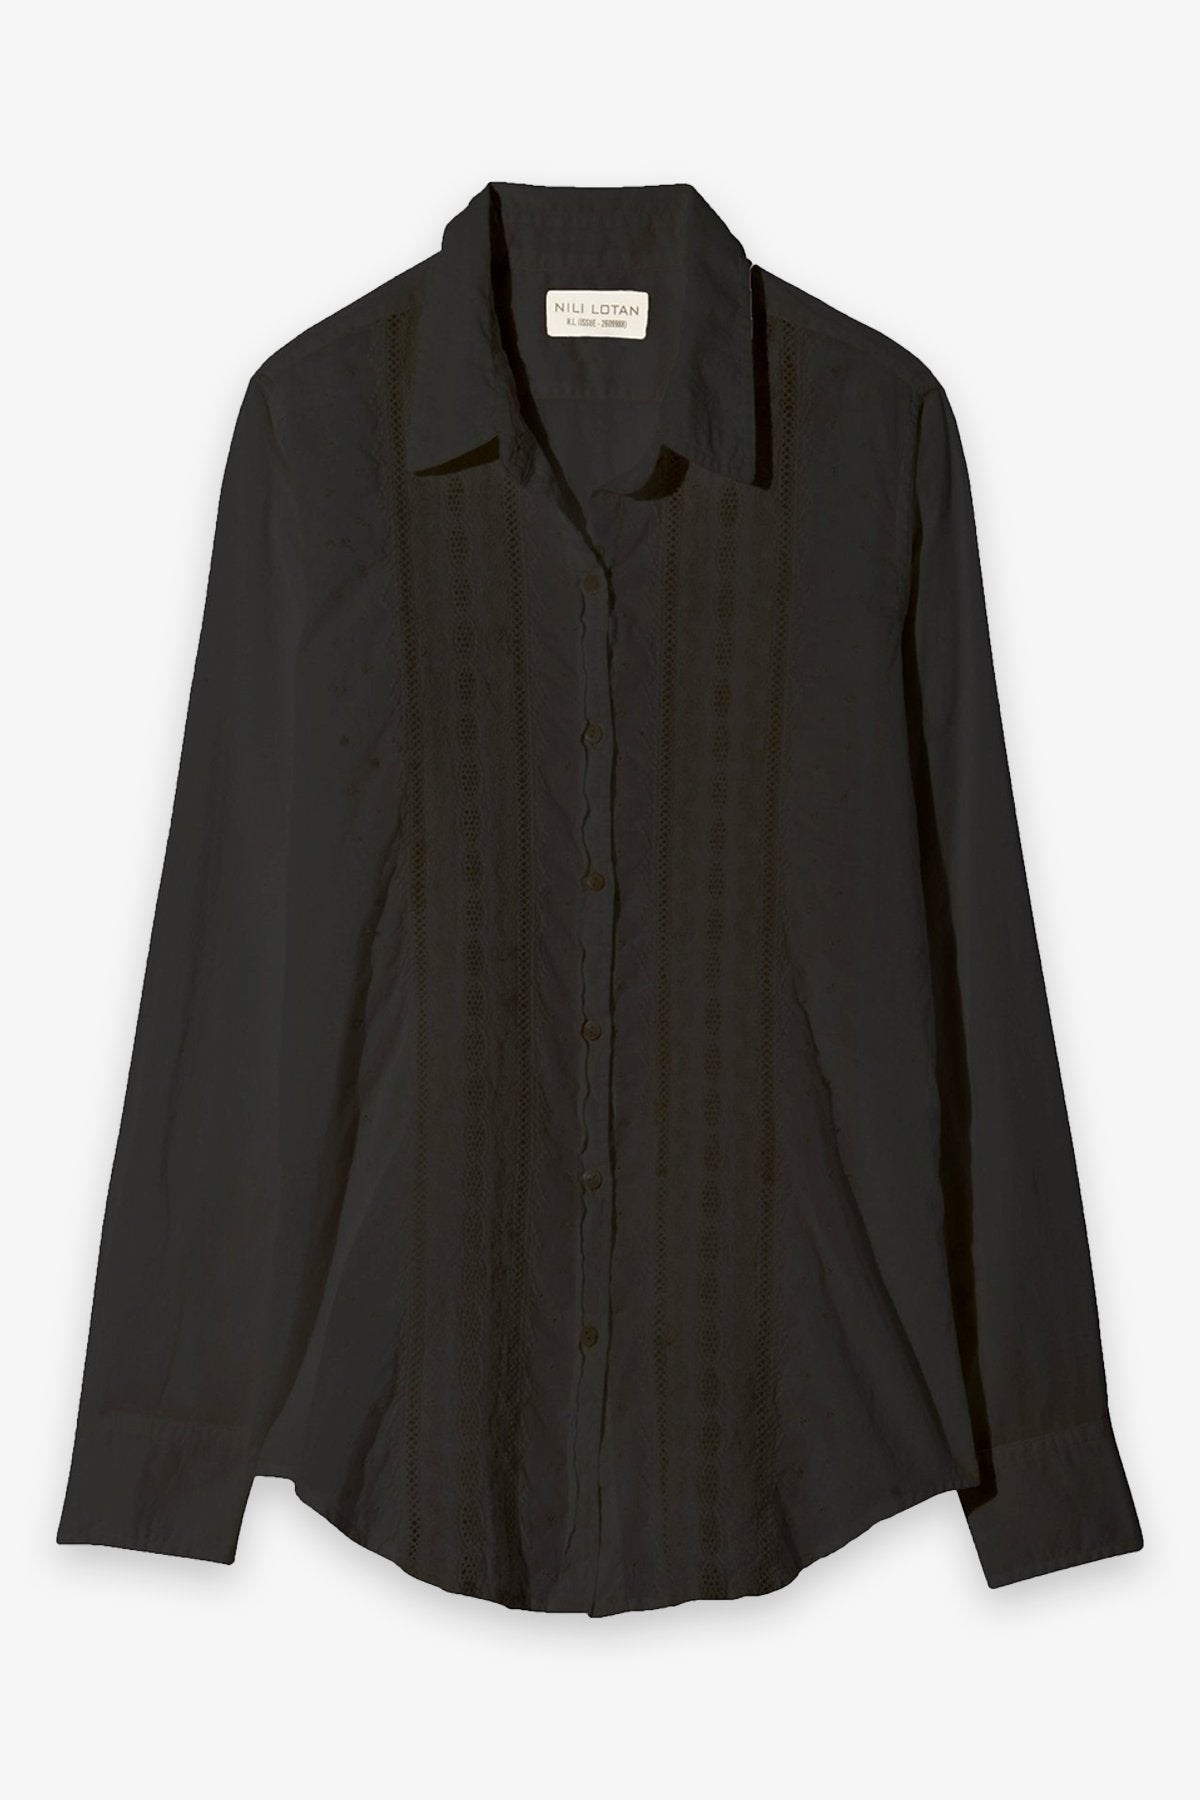 Harmonia Shirt in Black - shop-olivia.com